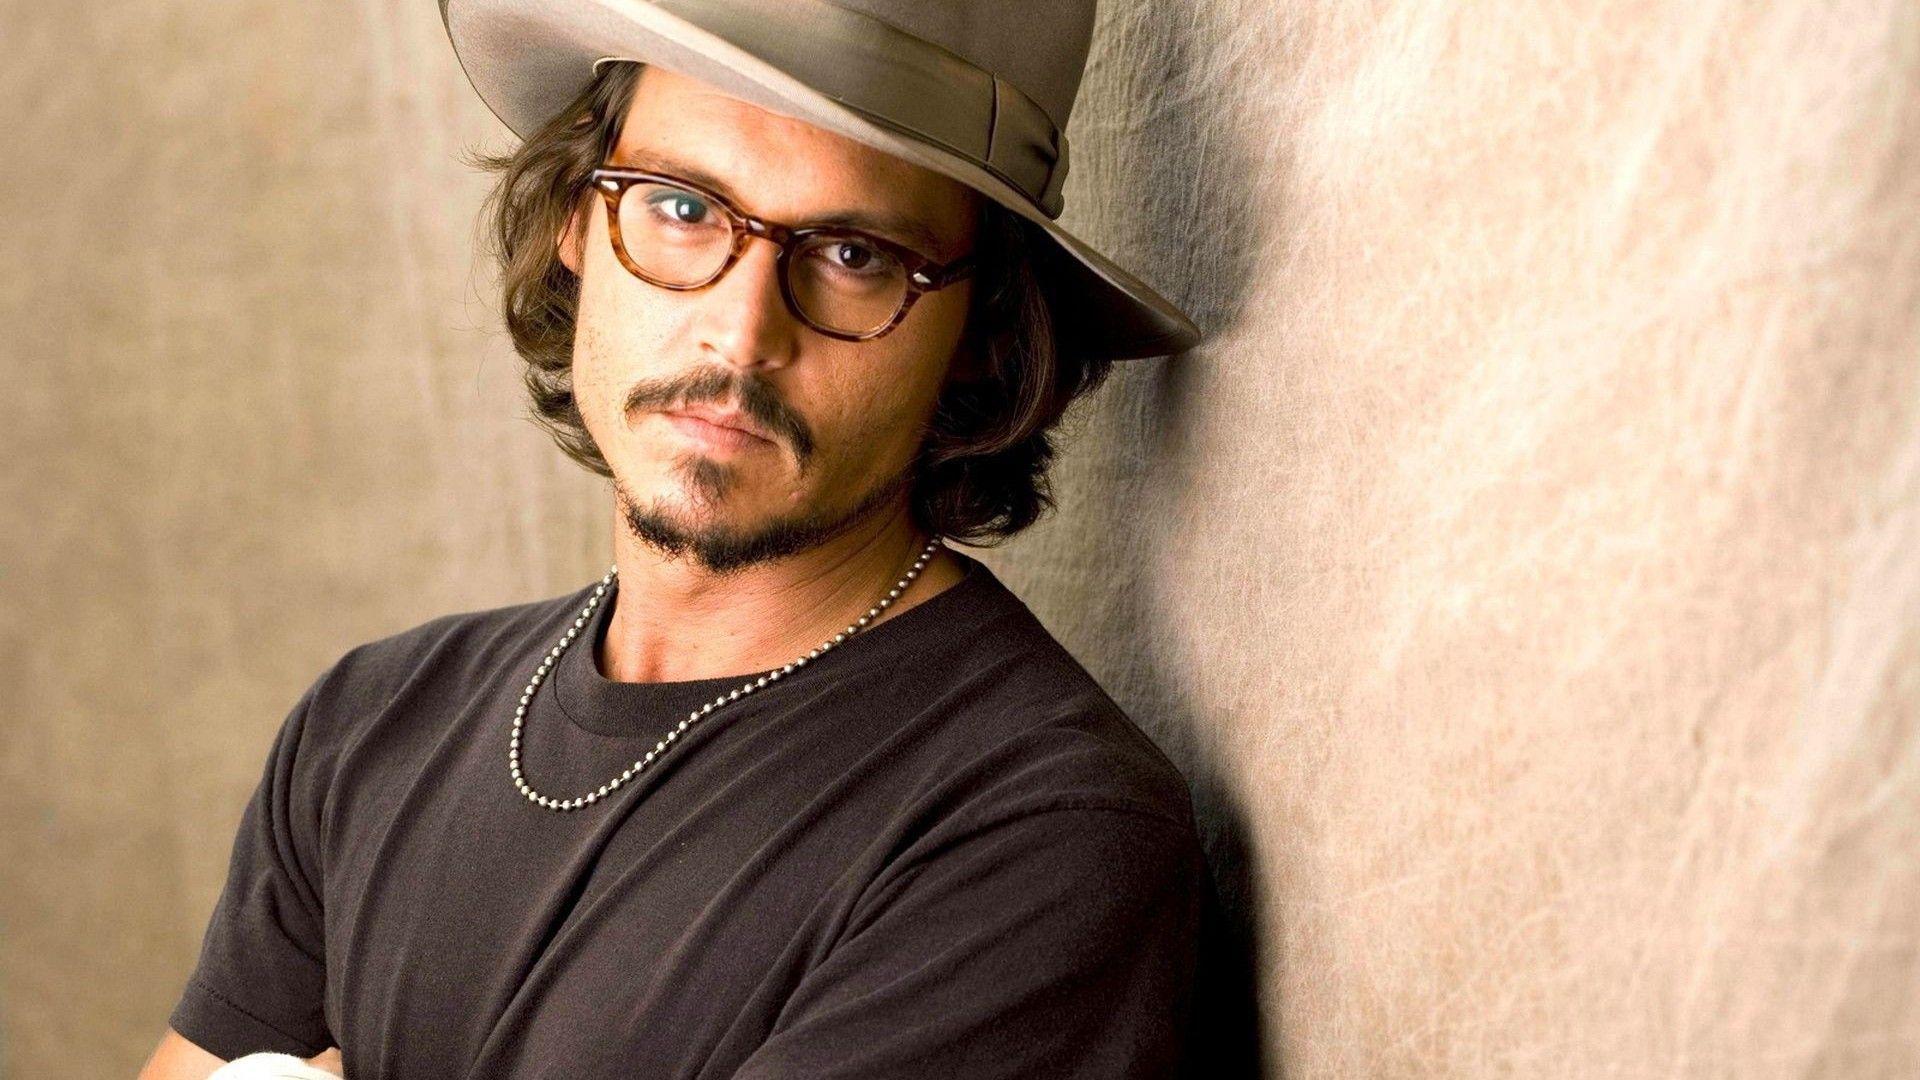 Johnny Depp HD Wallpaper. Johnny Depp Image Free Download